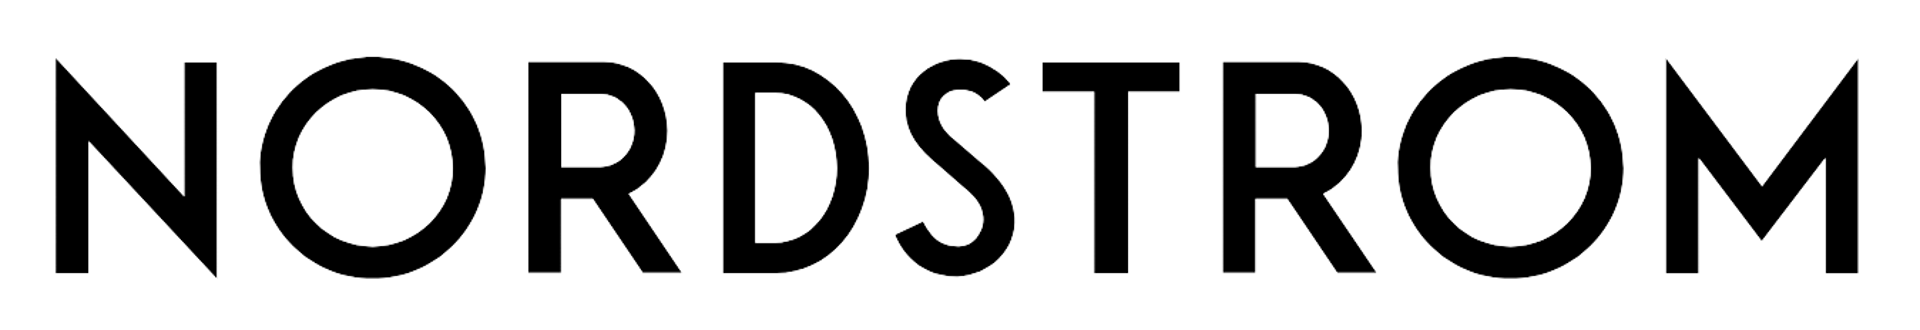 Nordstrom logo